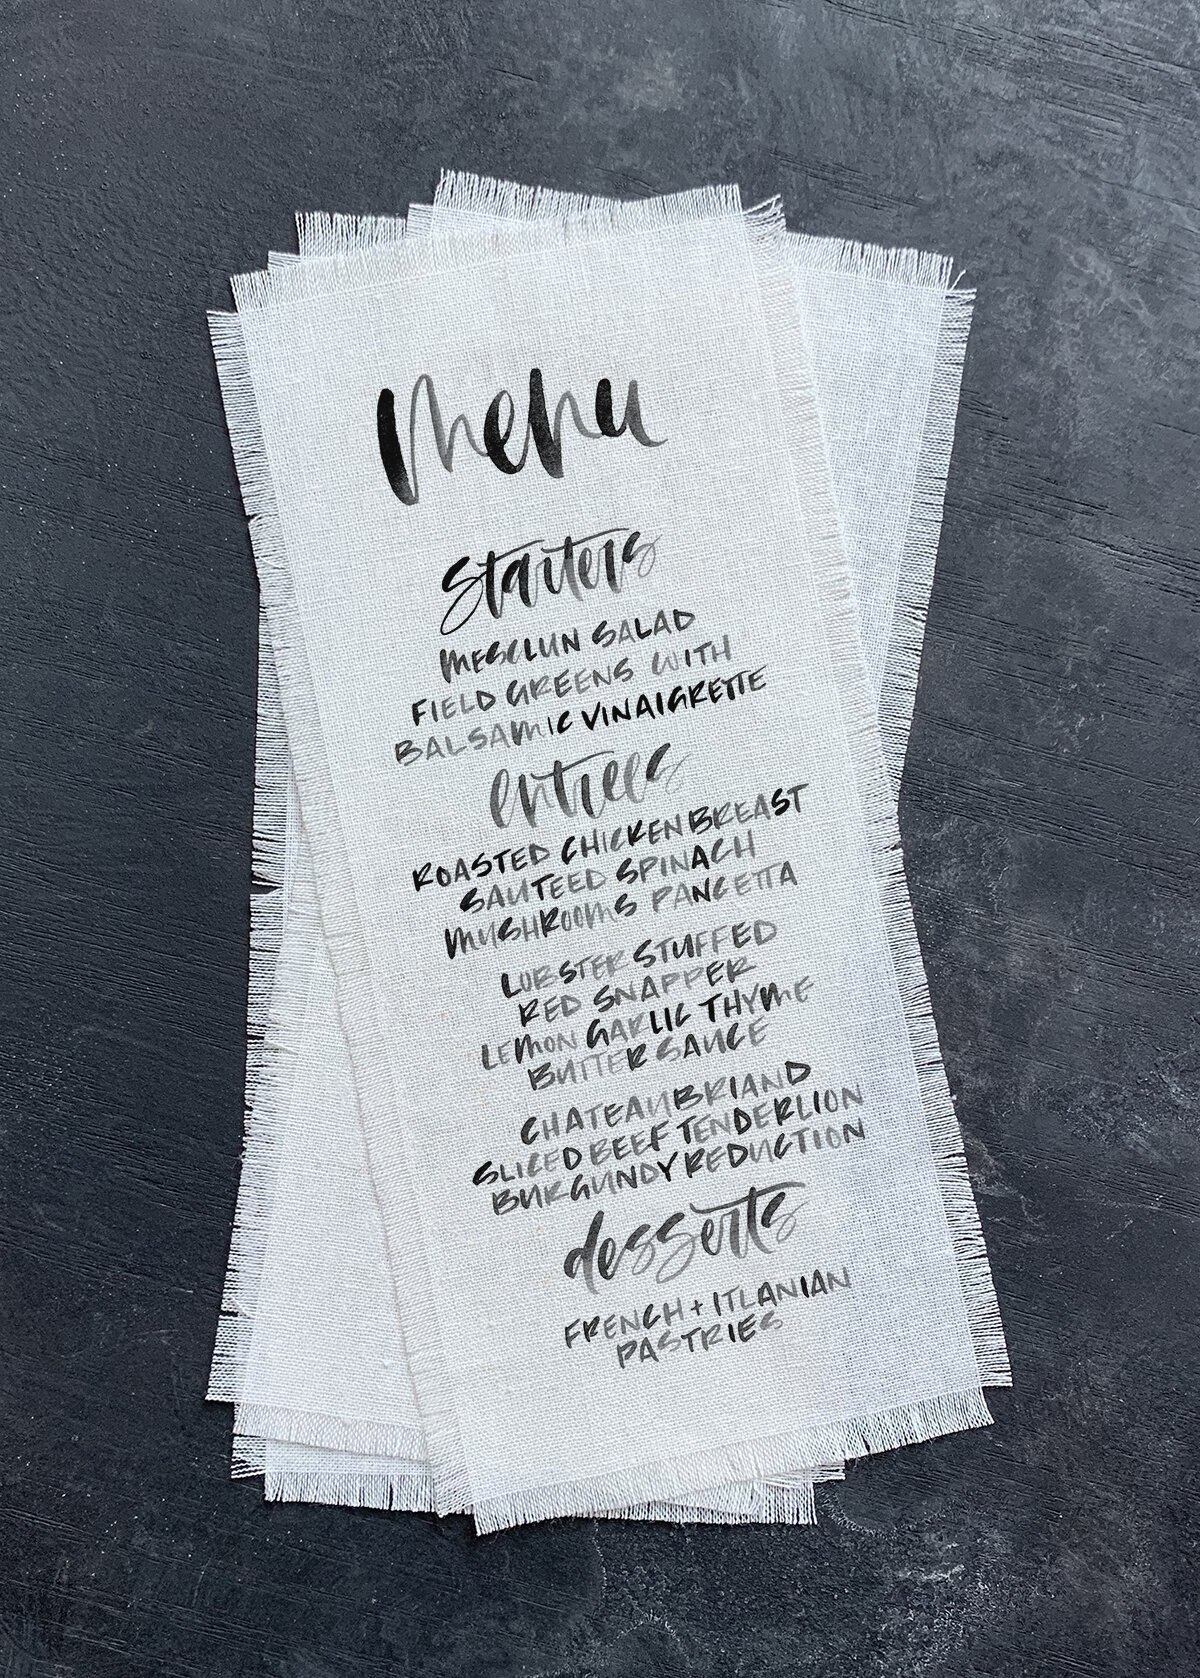 calliigraphy on fabroc printed linen wedding menus.